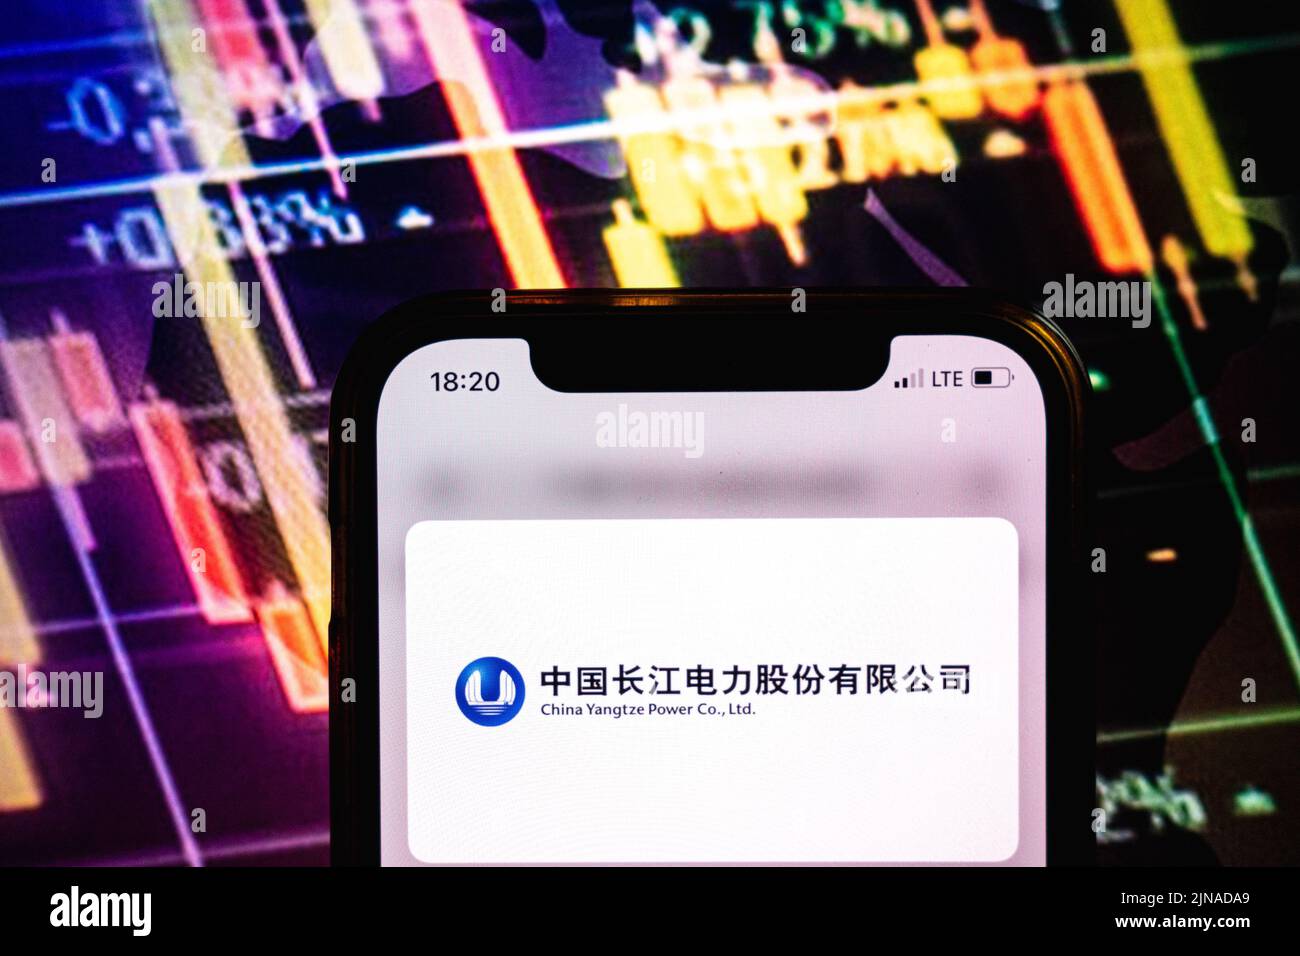 KONSKIE, POLAND - August 09, 2022: Smartphone displaying logo of China Yangtze Power company on stock exchange diagram background Stock Photo